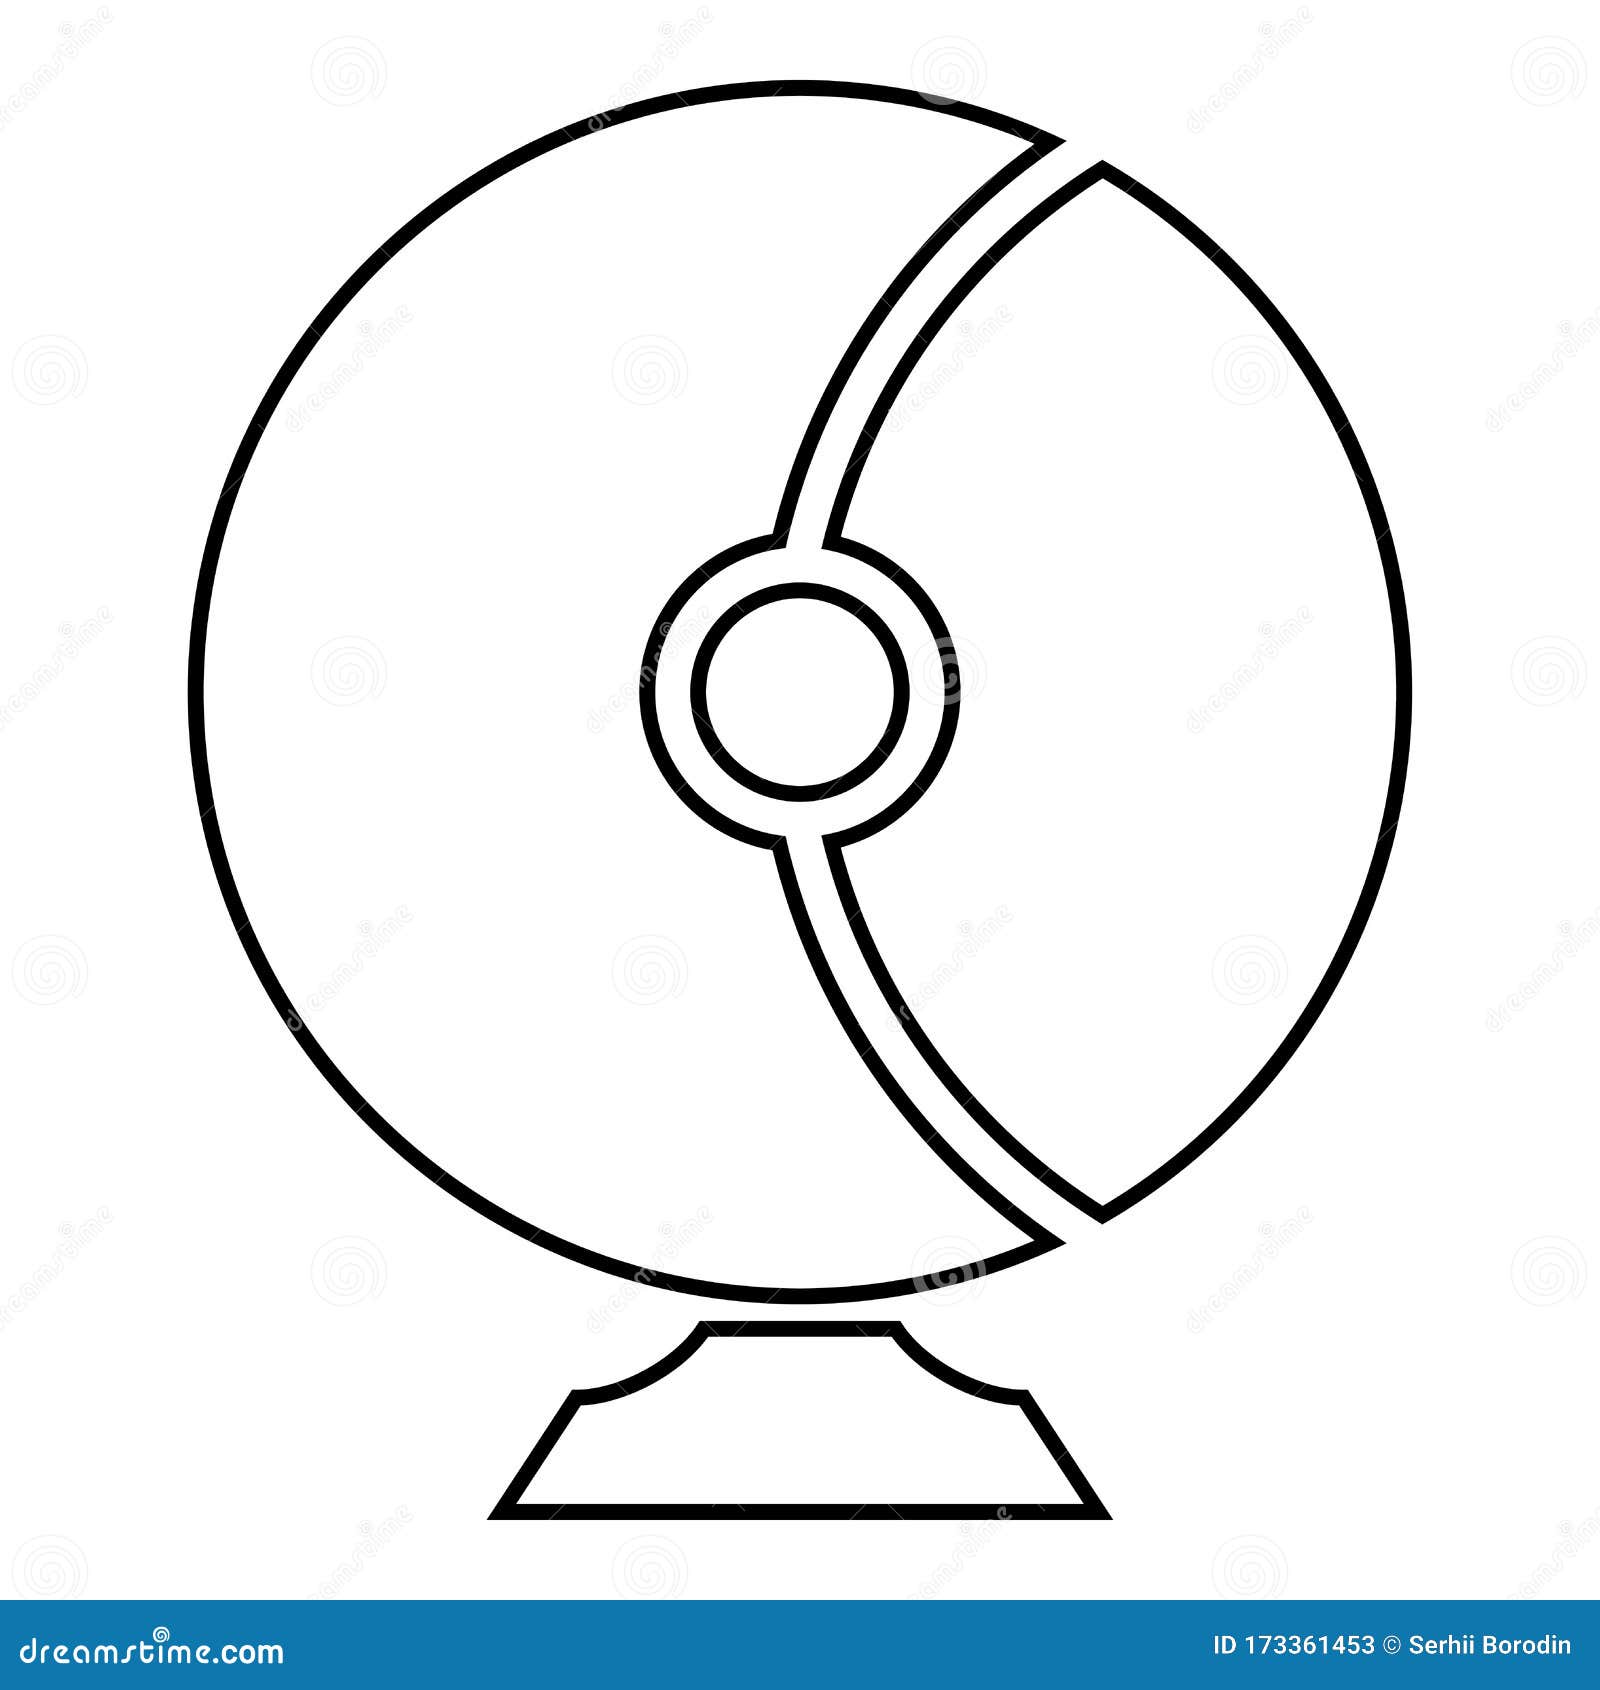 Astronaut Helmet for Space Cosmonaut Equipment Concept Icon Outline